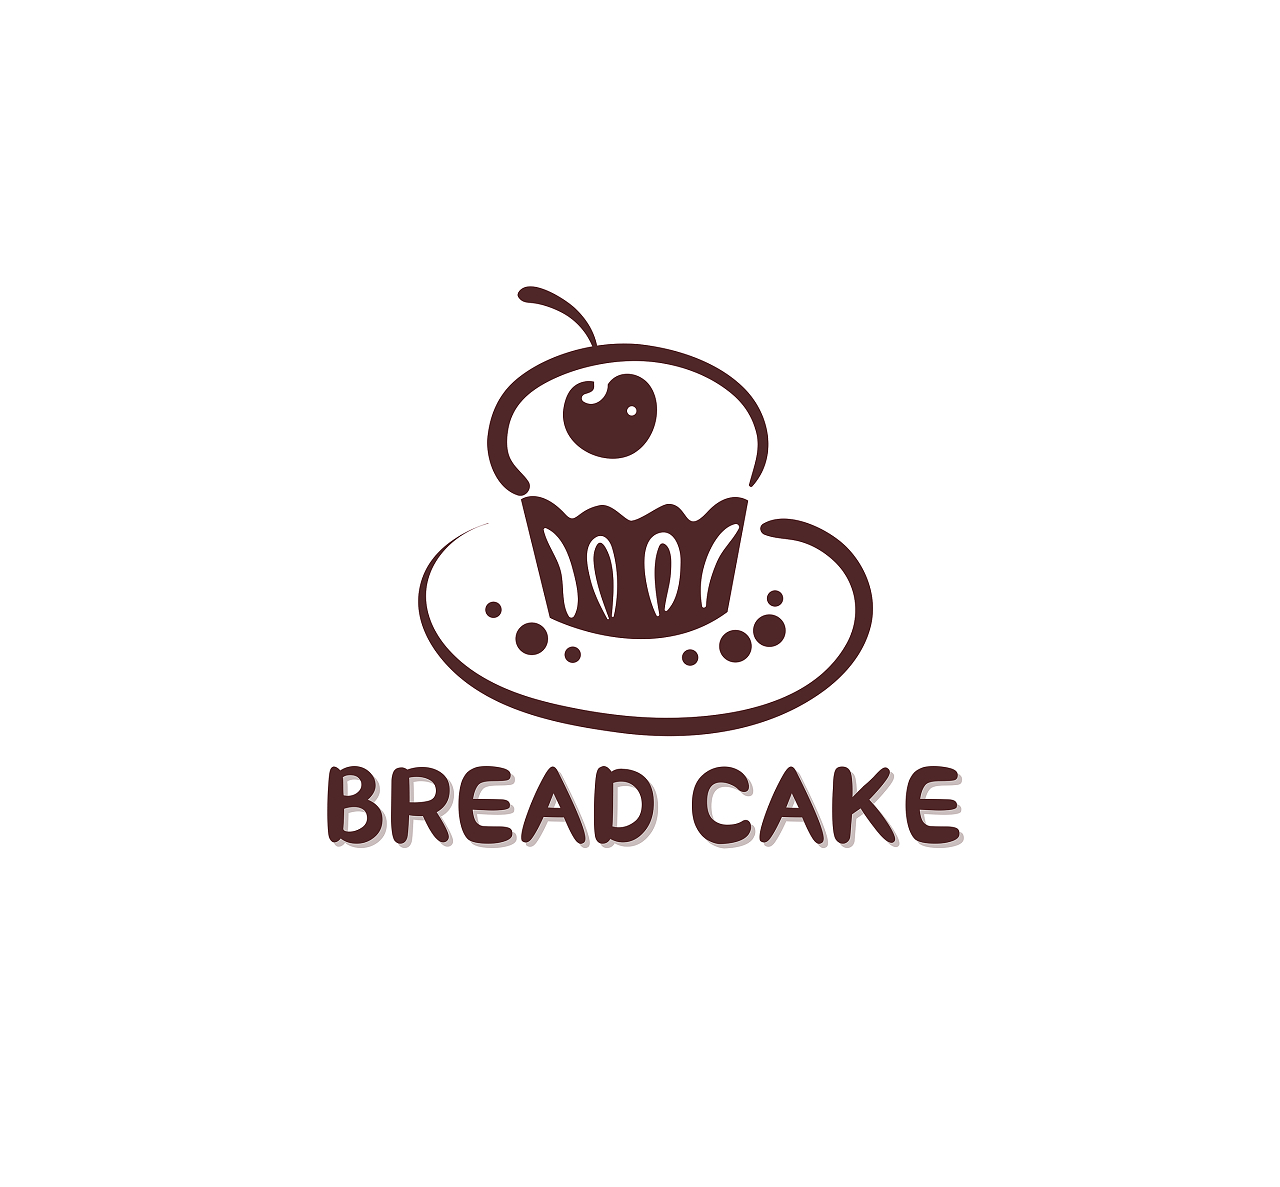 棕色手绘BREAD CAKE烘焙面包logo蛋糕logo